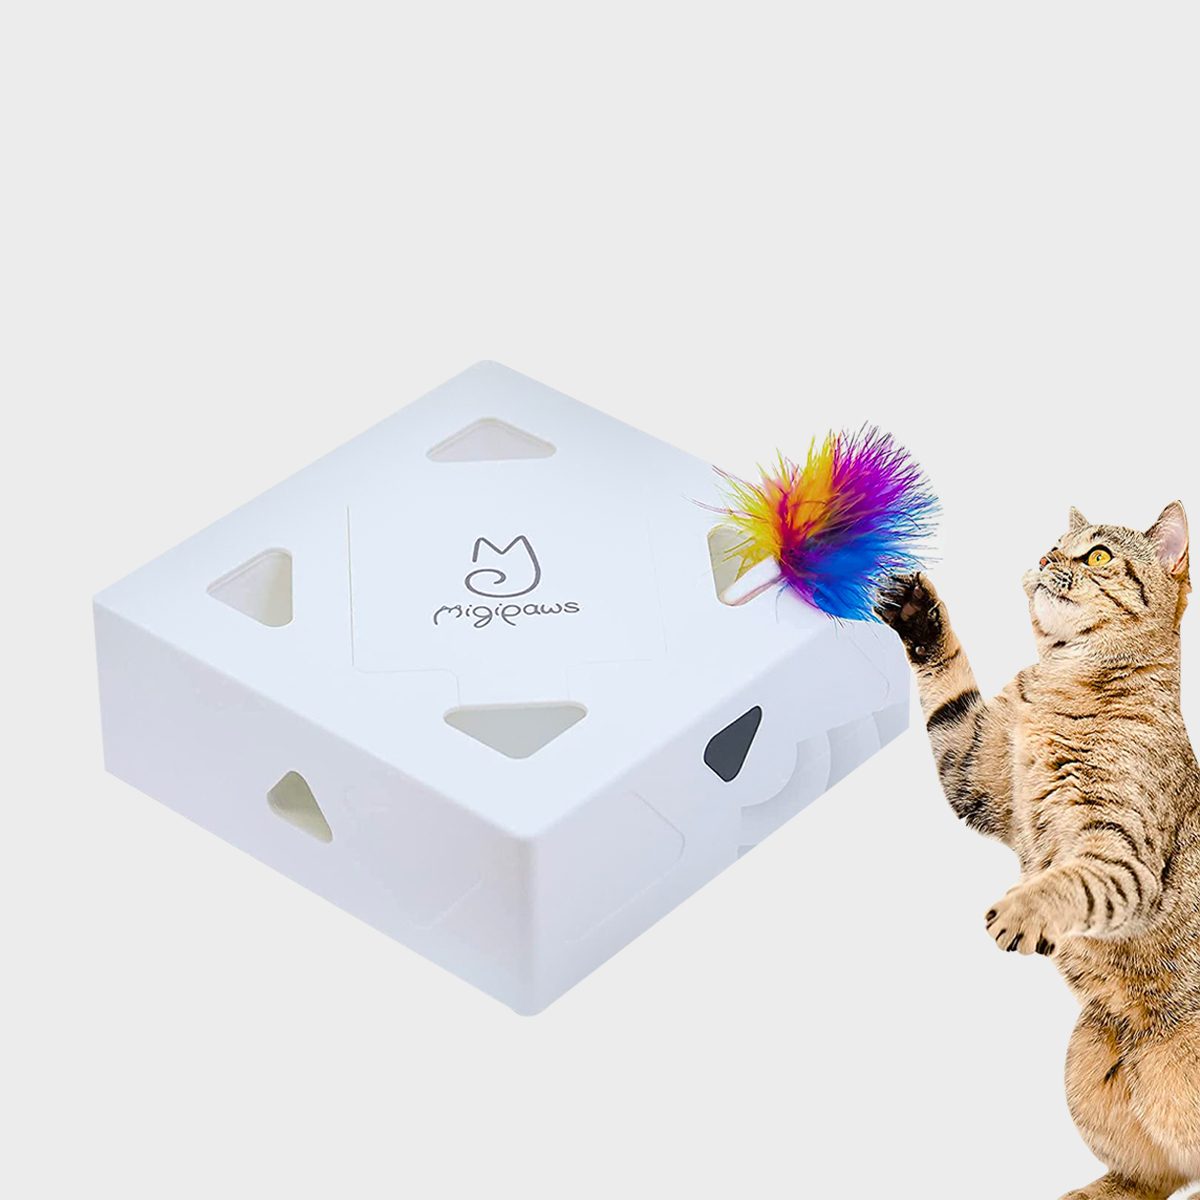 Interactive Tumbler Cat Feeding Toy - Large - Catwise Pet Shop